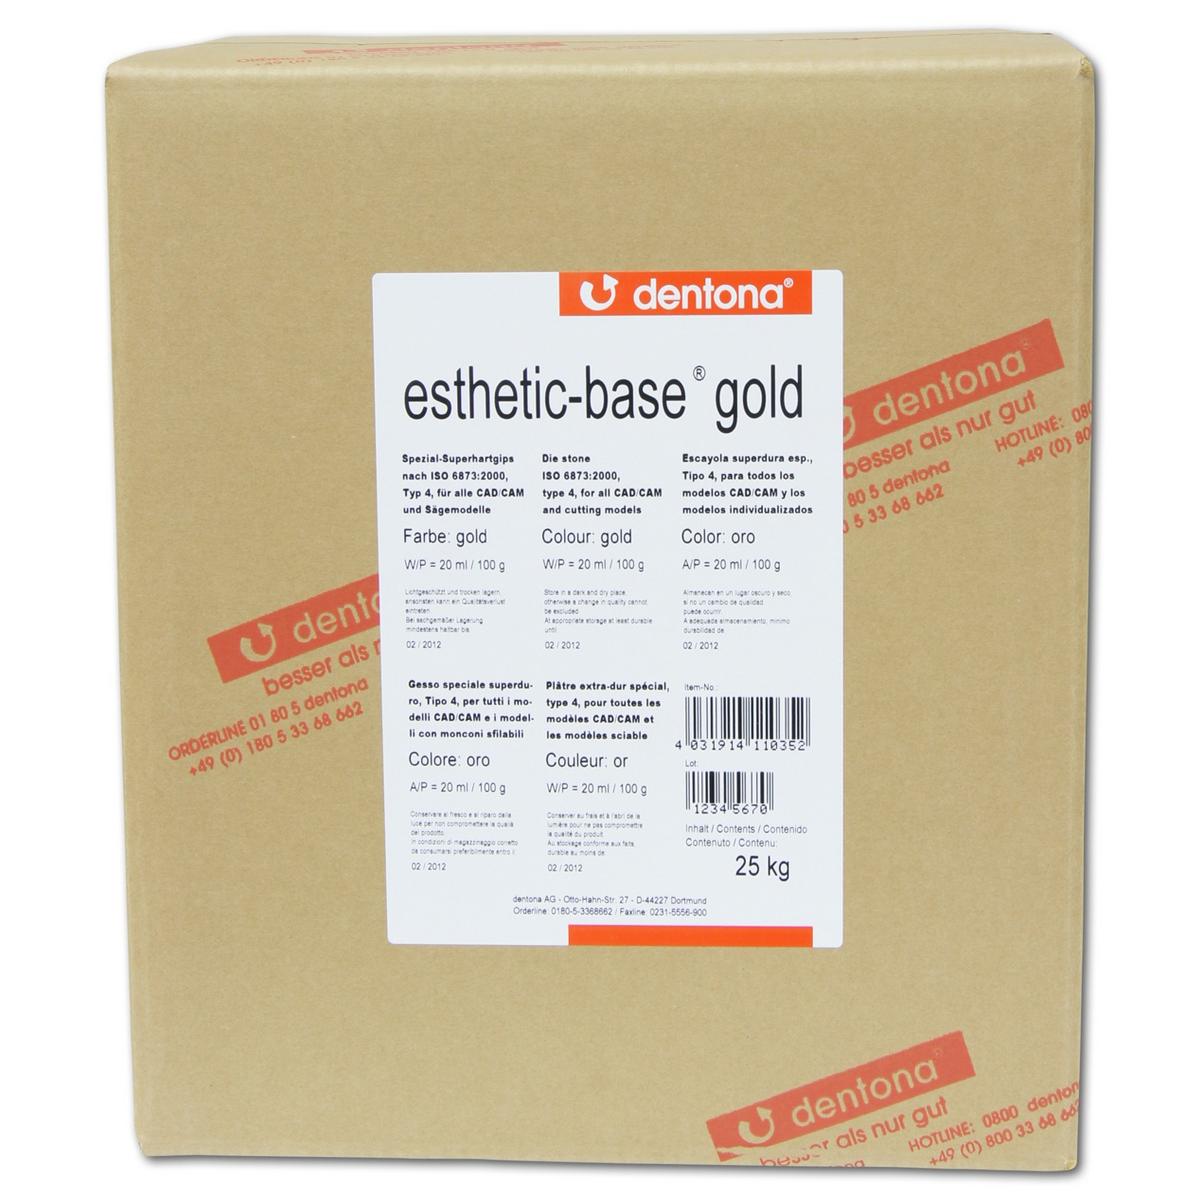 esthetic-base® gold - Karton 25 kg